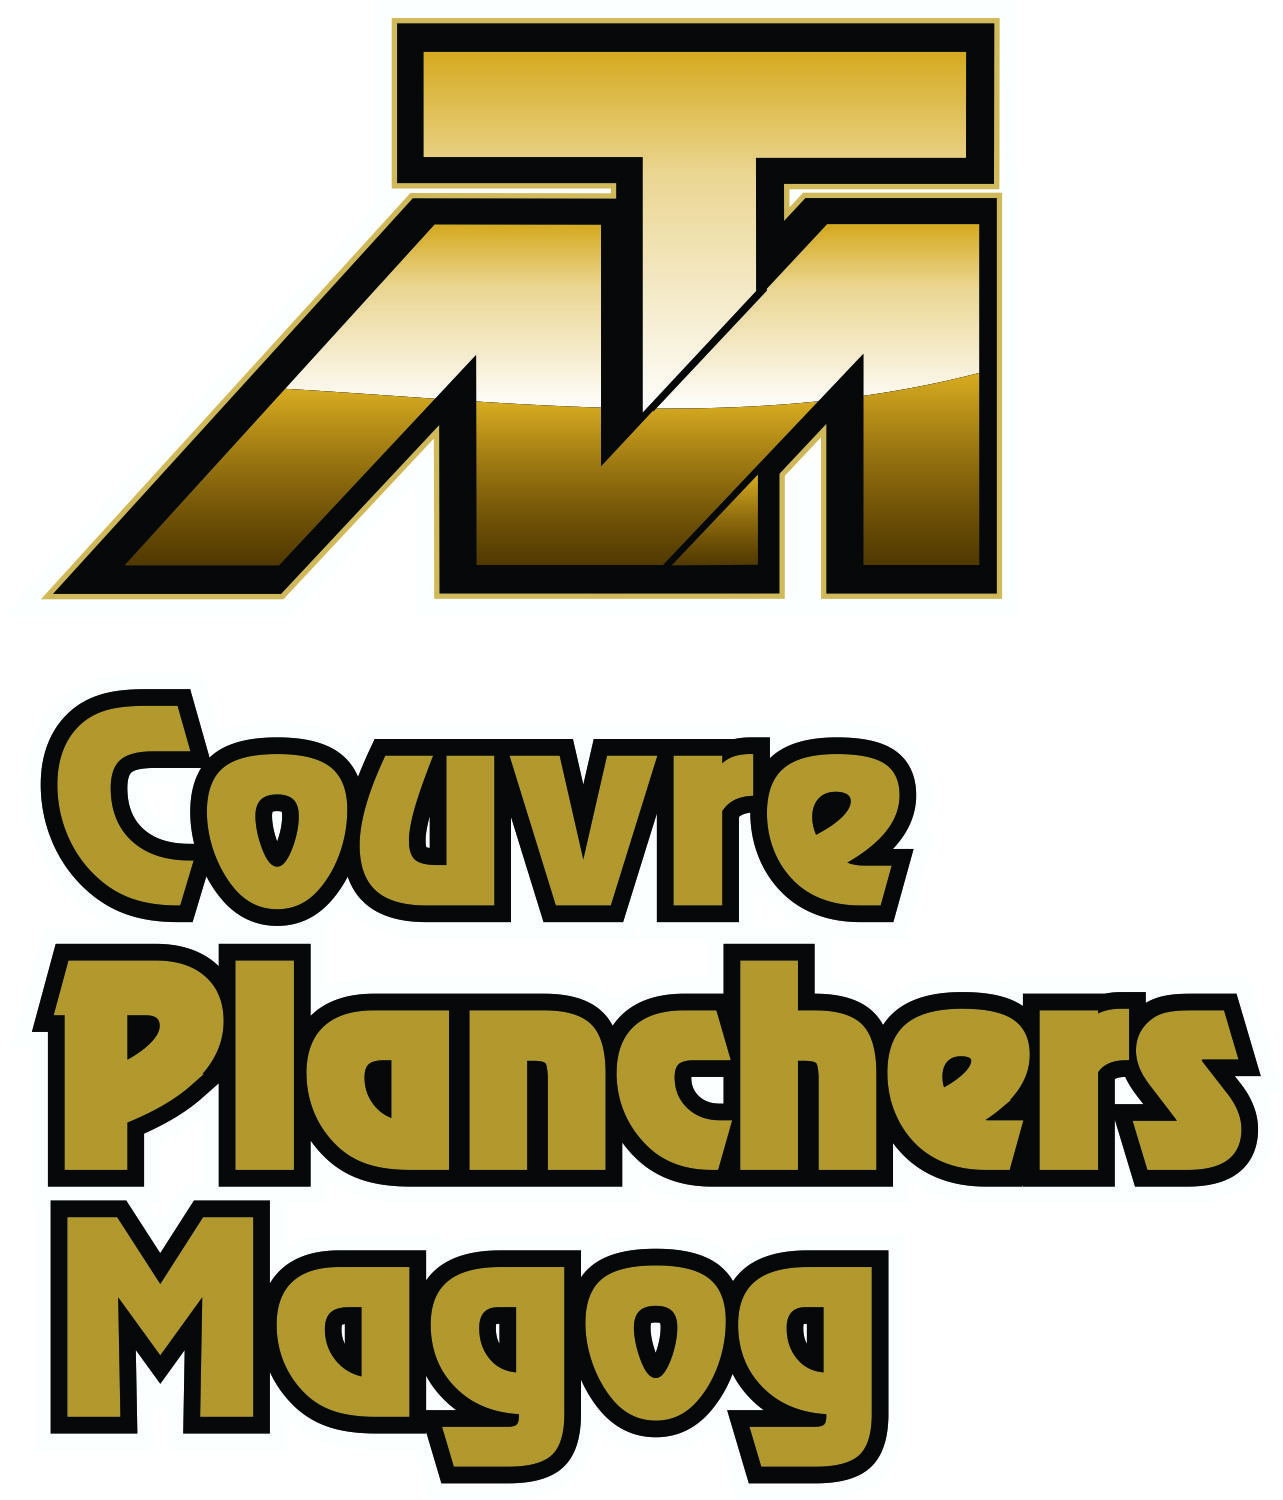 Couvre-Planchers Tapis Magog inc.